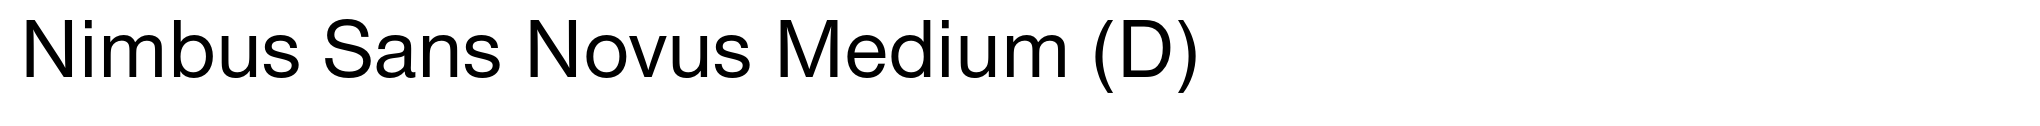 Nimbus Sans Novus Medium (D) image